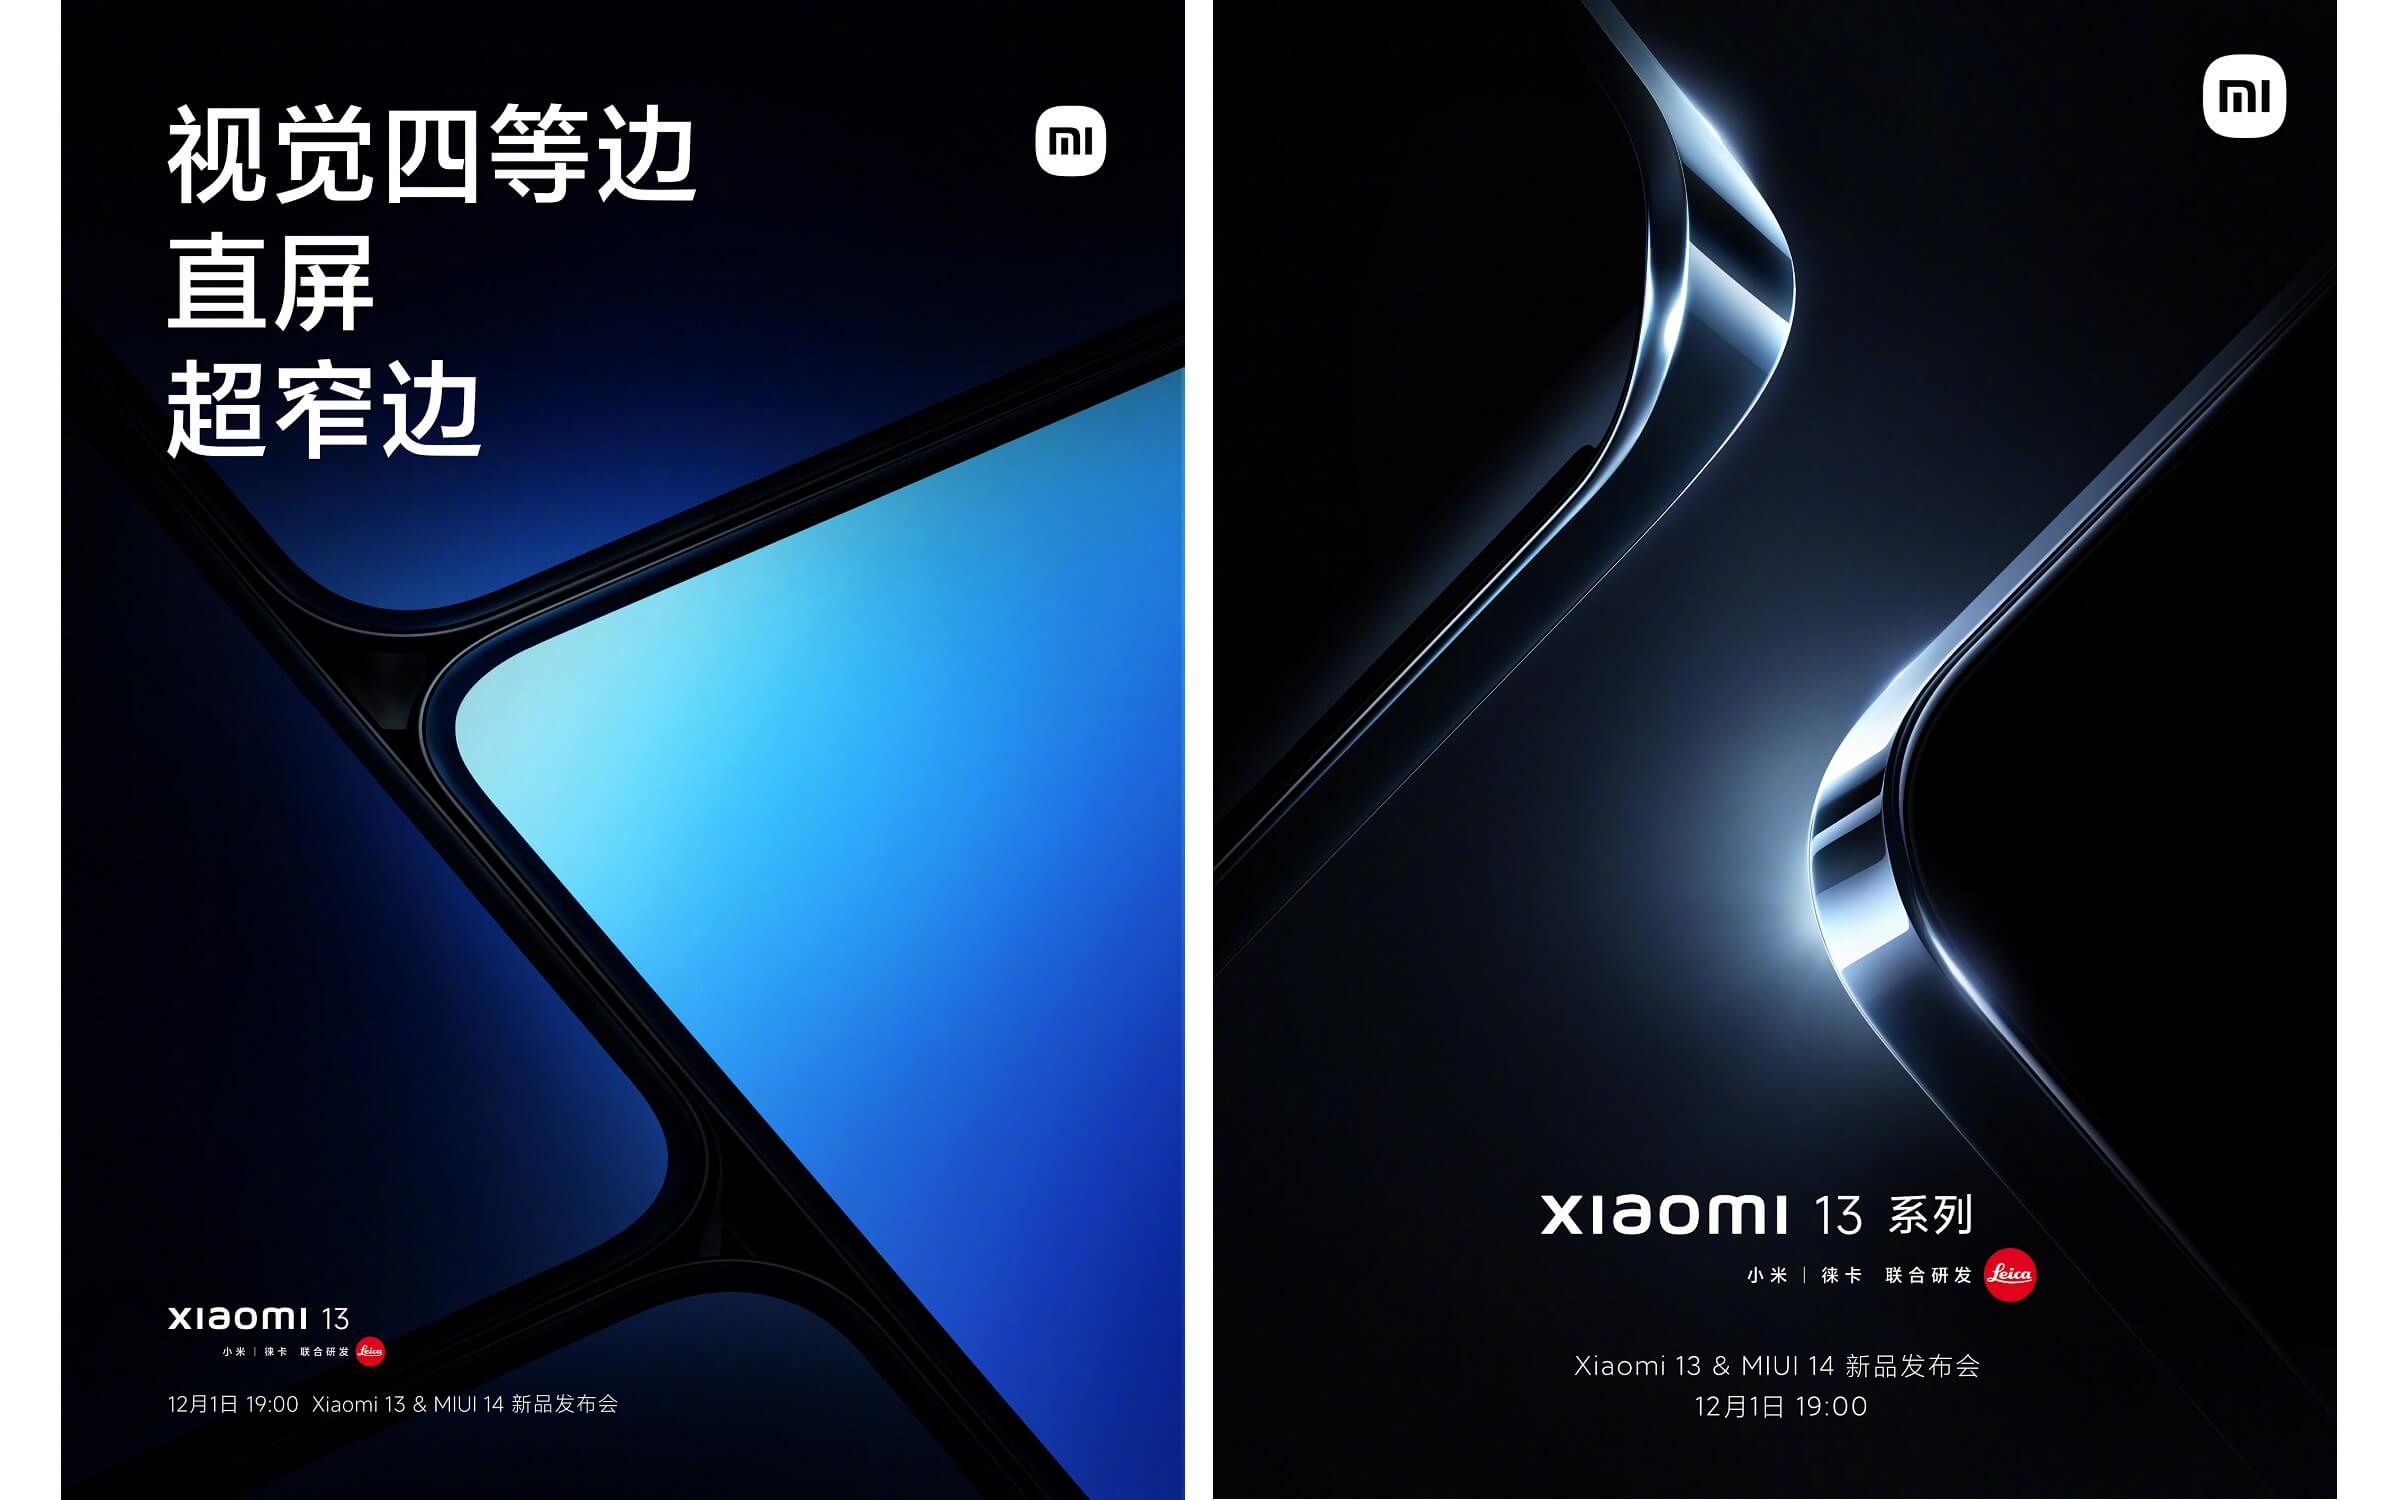 Xiaomi 13 and Xiaomi 13 Pro display